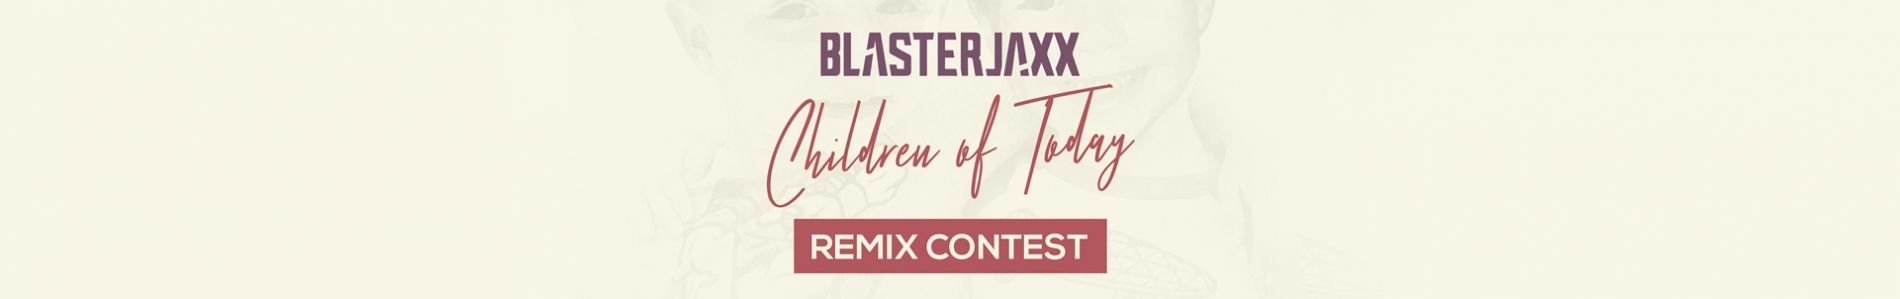 Remix Blasterjaxx' 'Children of Today' and win a FL Studio package!